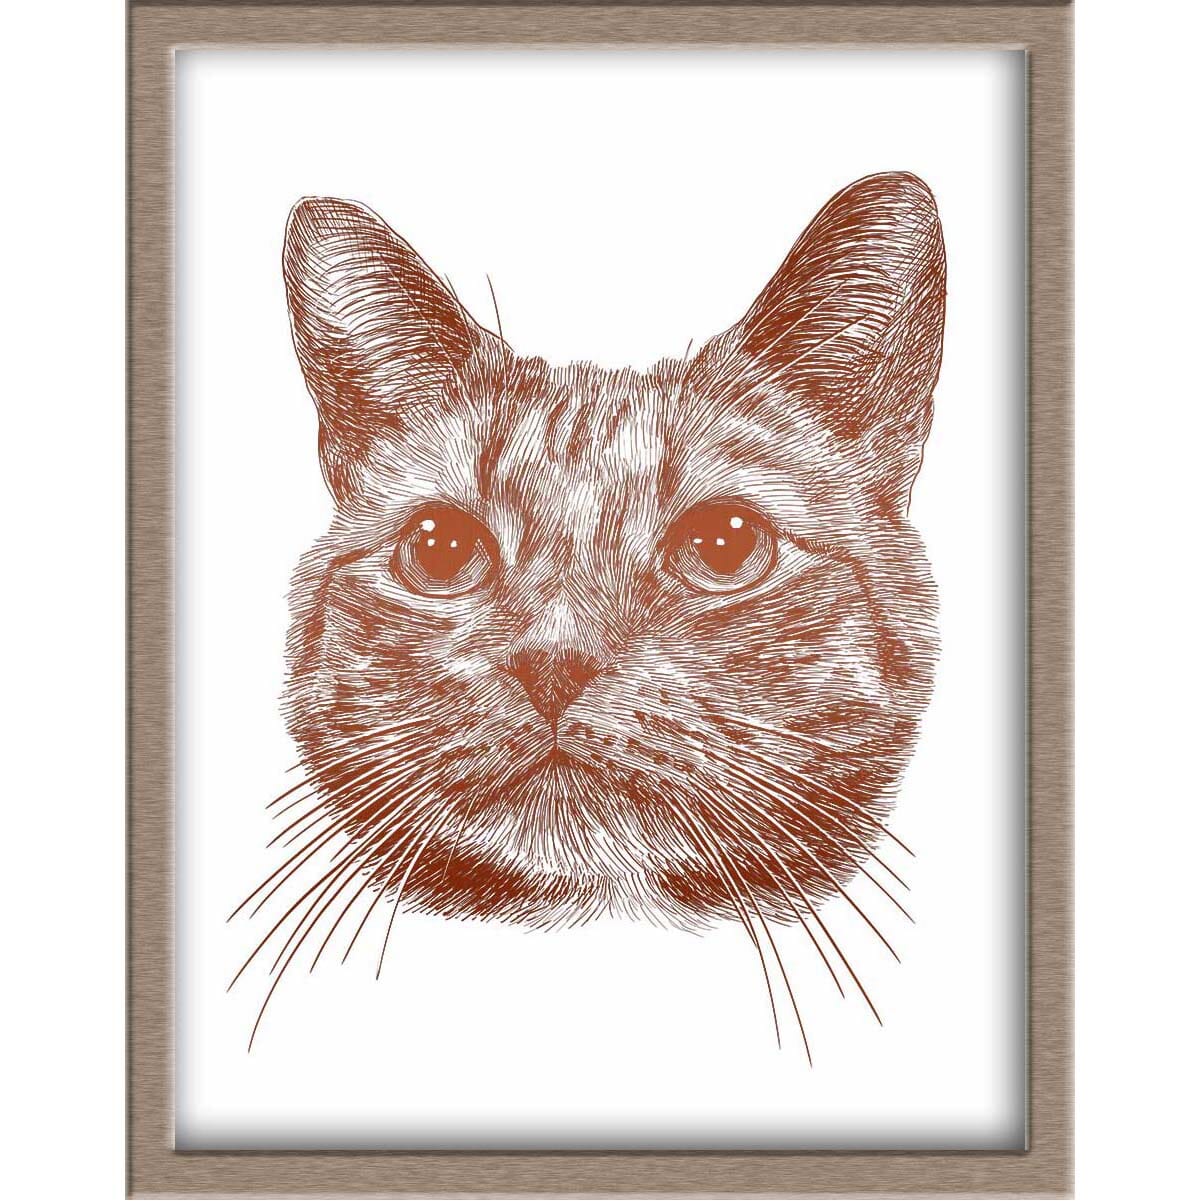 Tabby Cat Foiled Print (Tim) Posters, Prints, & Visual Artwork JoyousJoyfulJoyness 